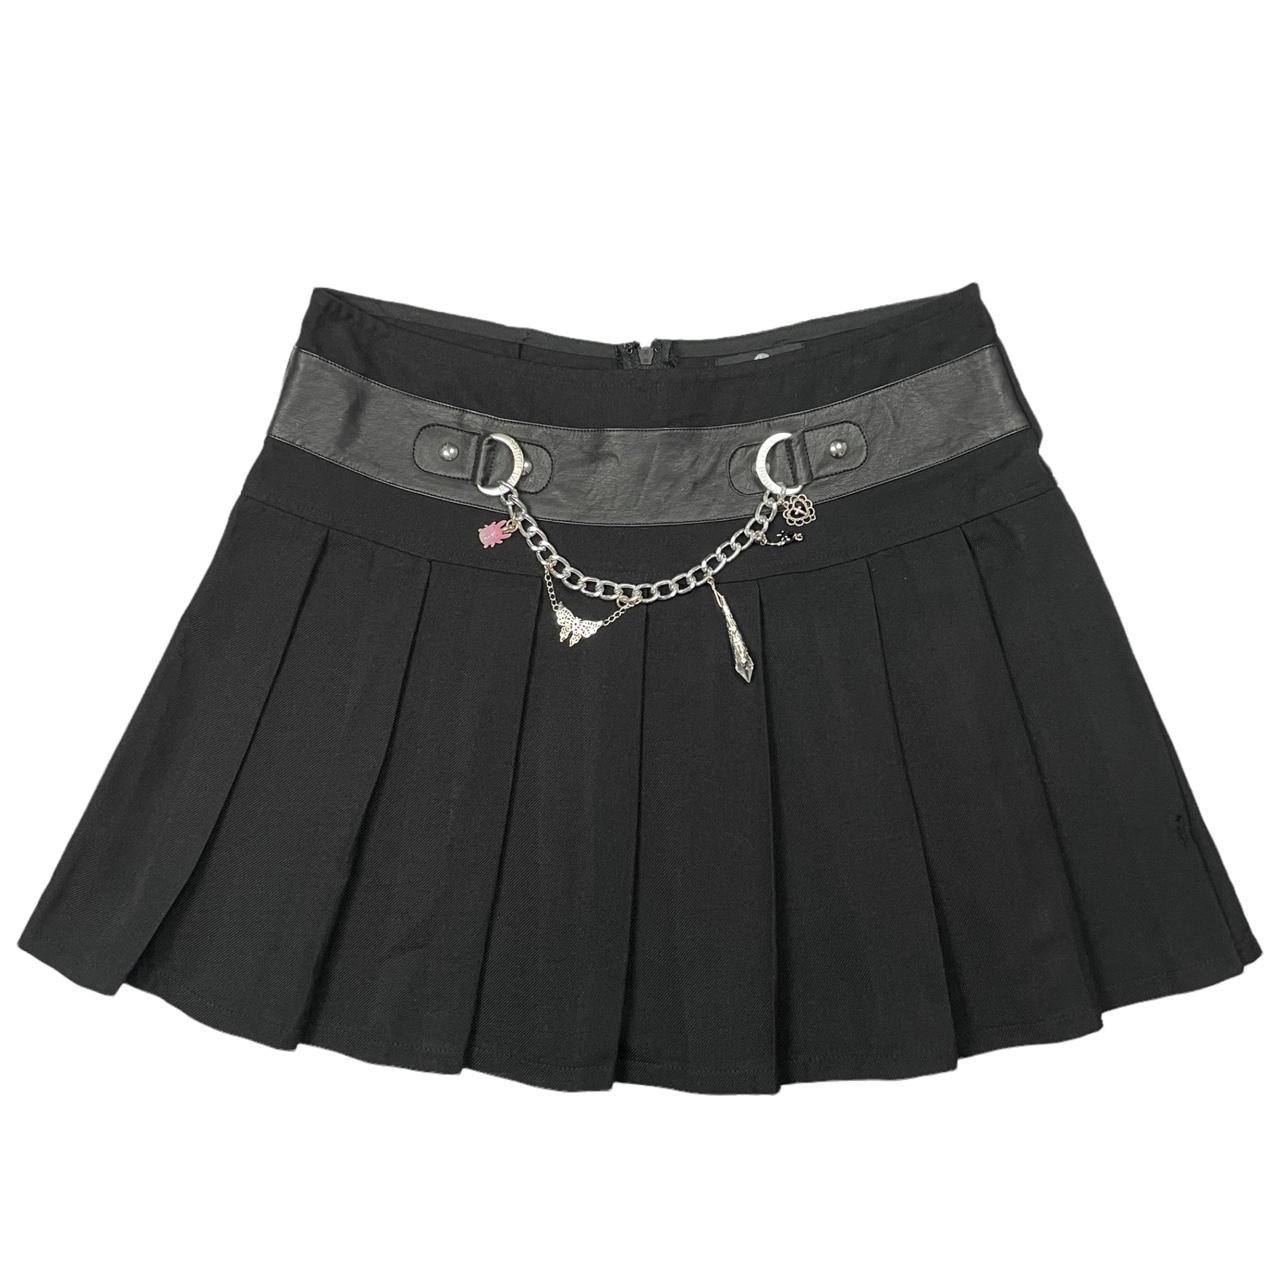 Black pleated mini skirt w customized charm... - Depop